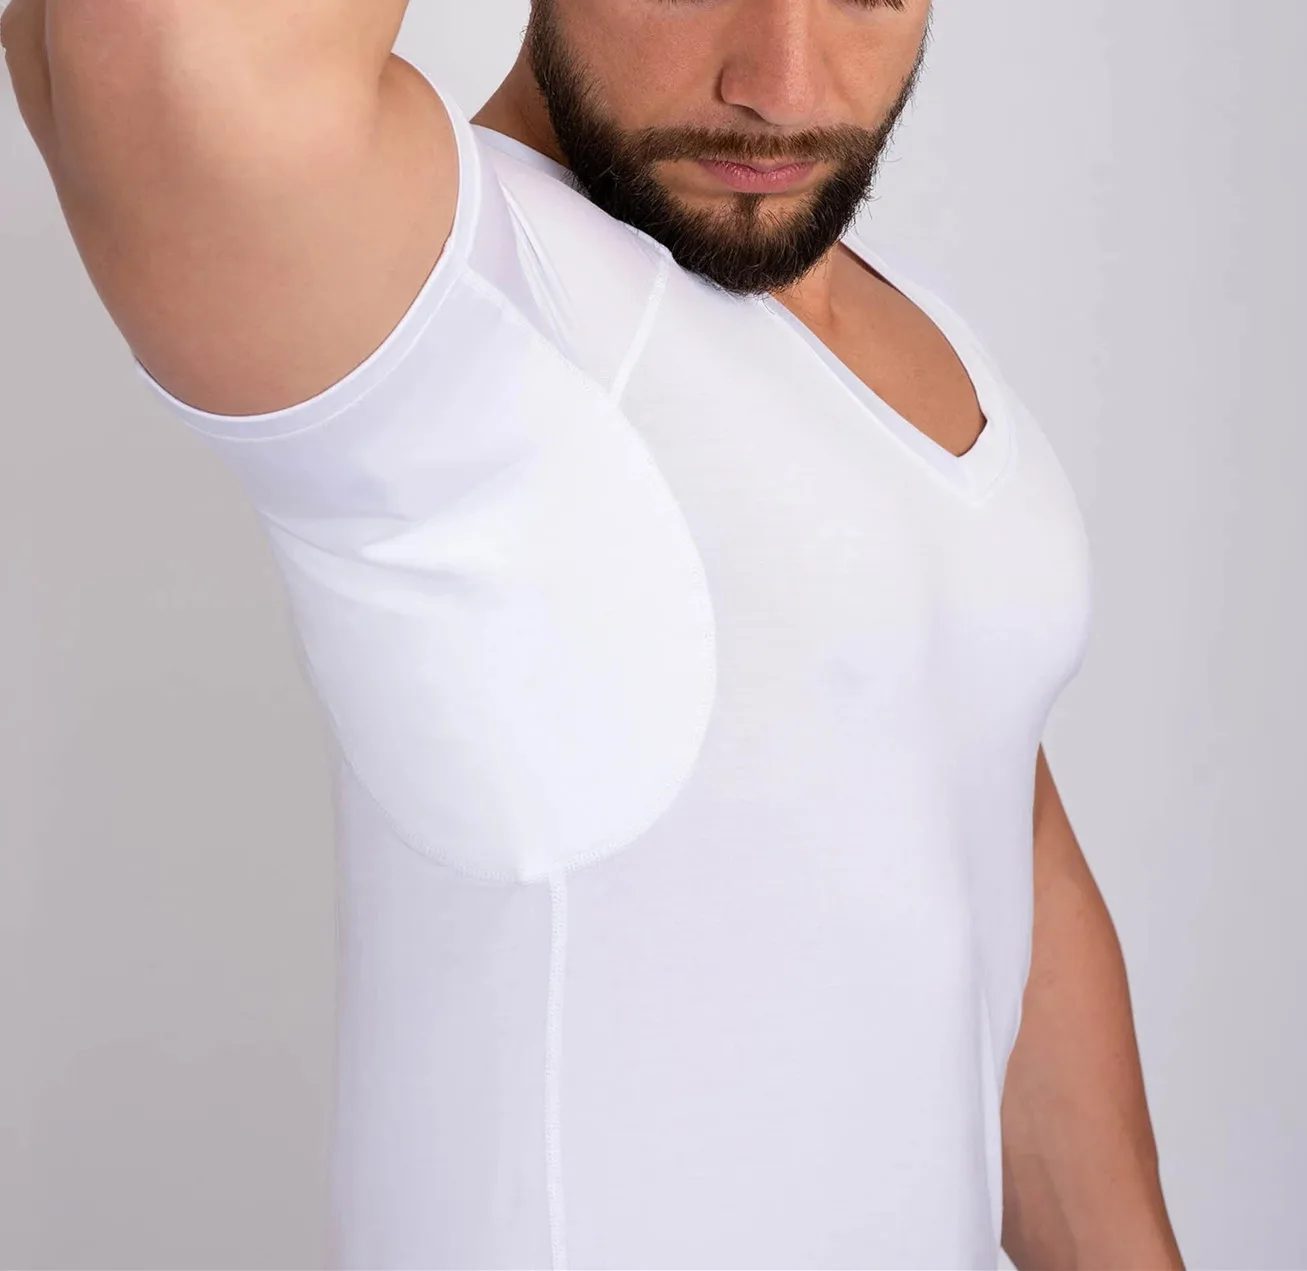 Absorb Perspiration Keep Your Garments Armpit Bone Bry Micro Modal  Sweatproof Undershirt T Shirt - AliExpress